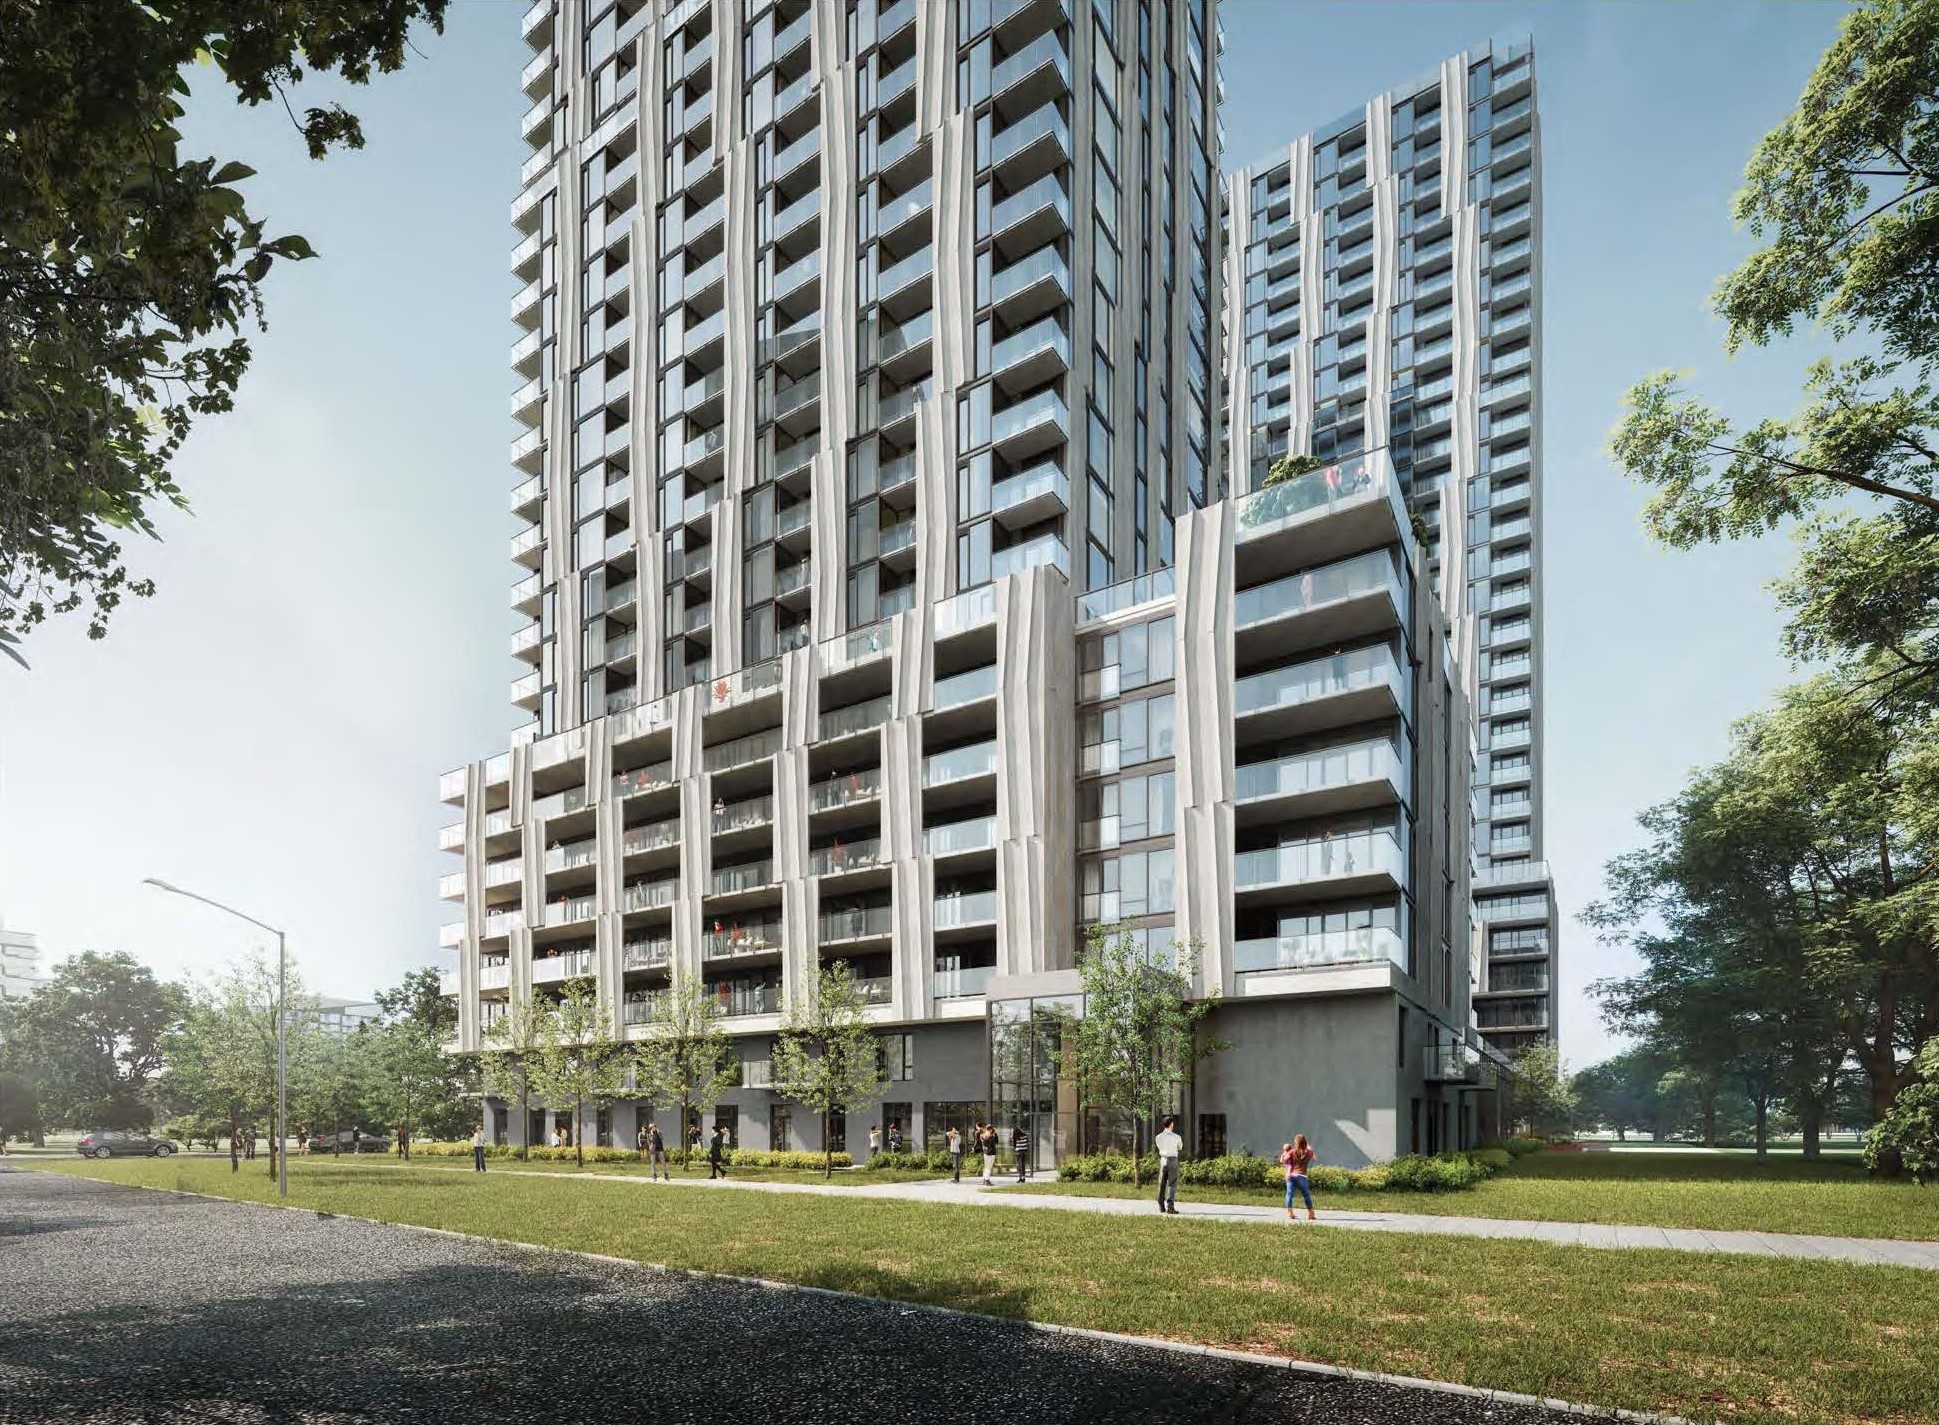 Korsiak Urban Planning - Oakville Portfolio - Trafalgar Road, High-Rise Development - Oakville, Ontario